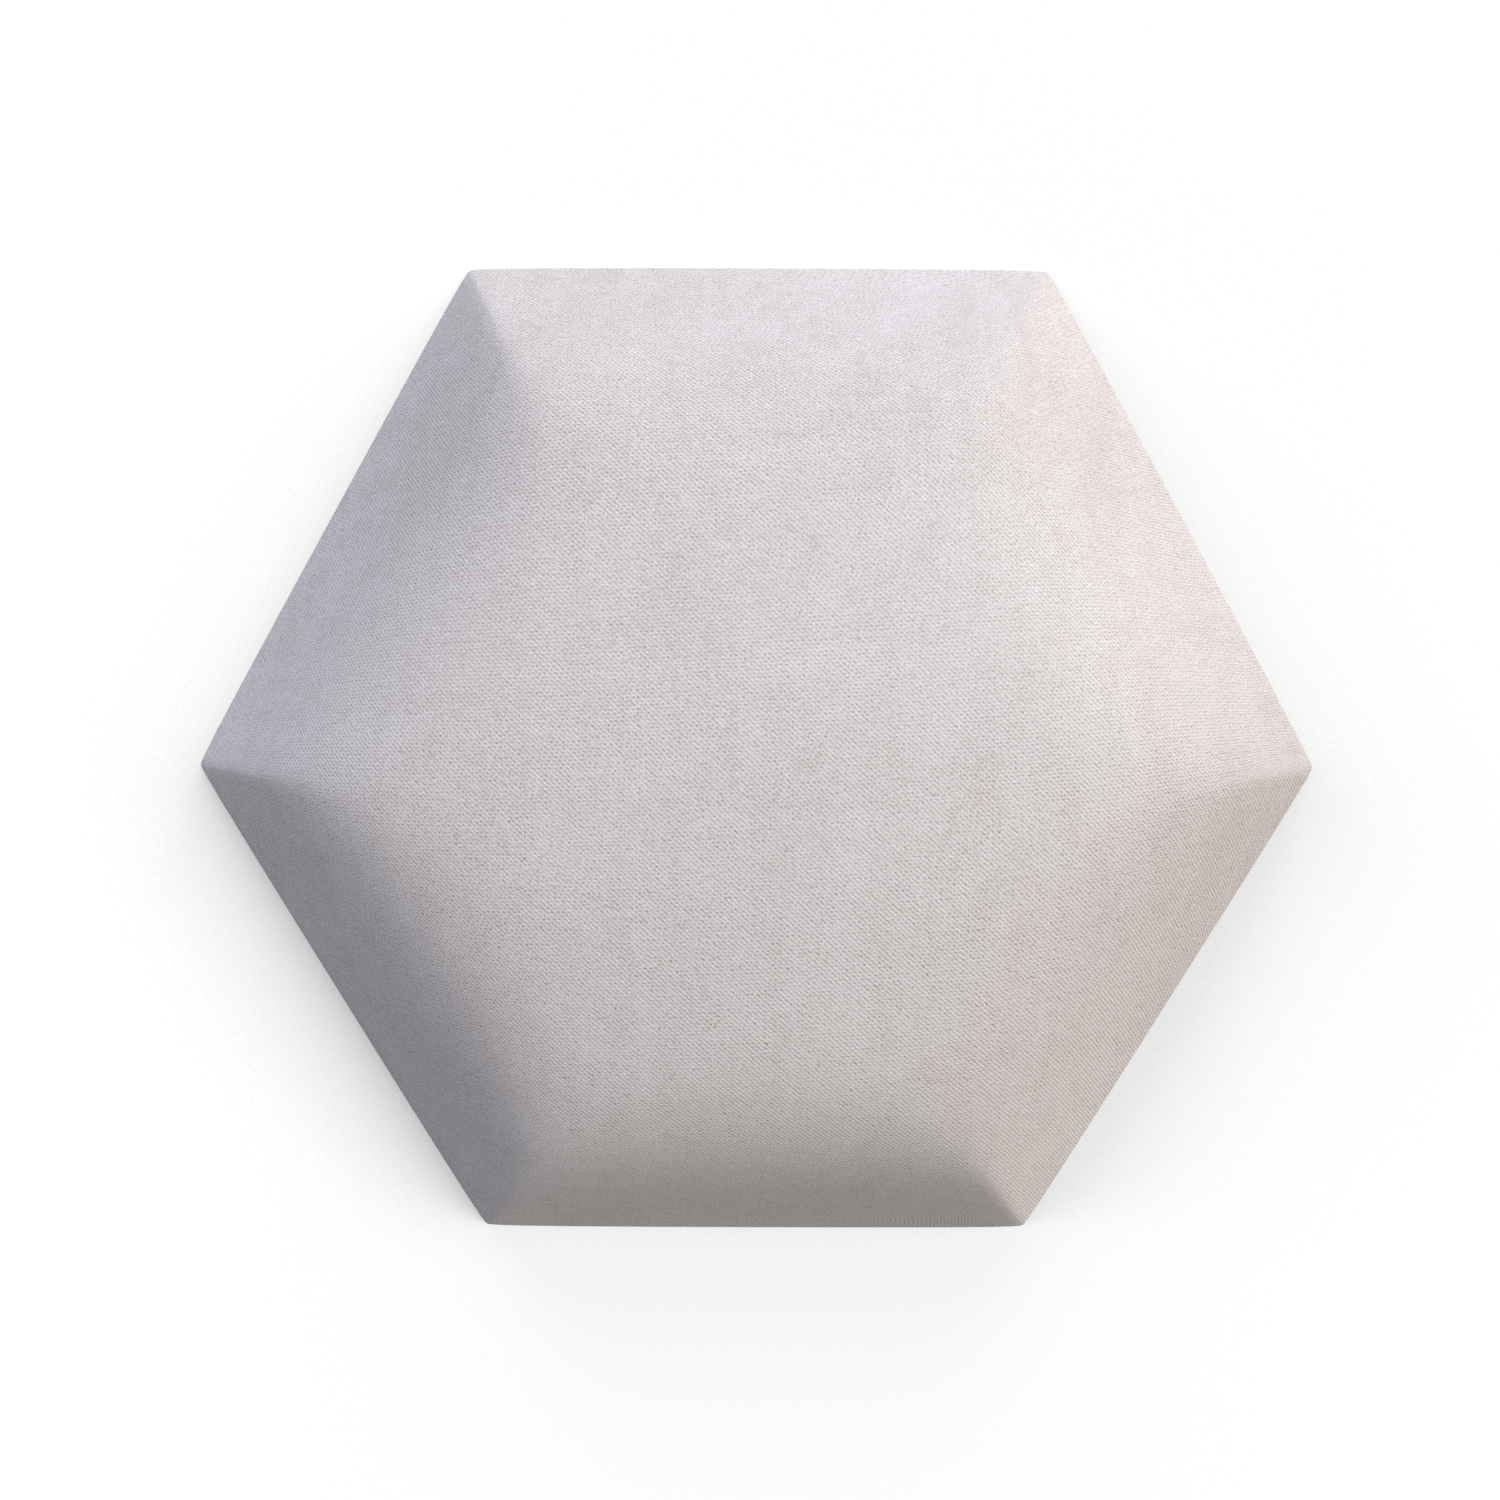 Polsterpaneel Hexagon - Napoli Velours